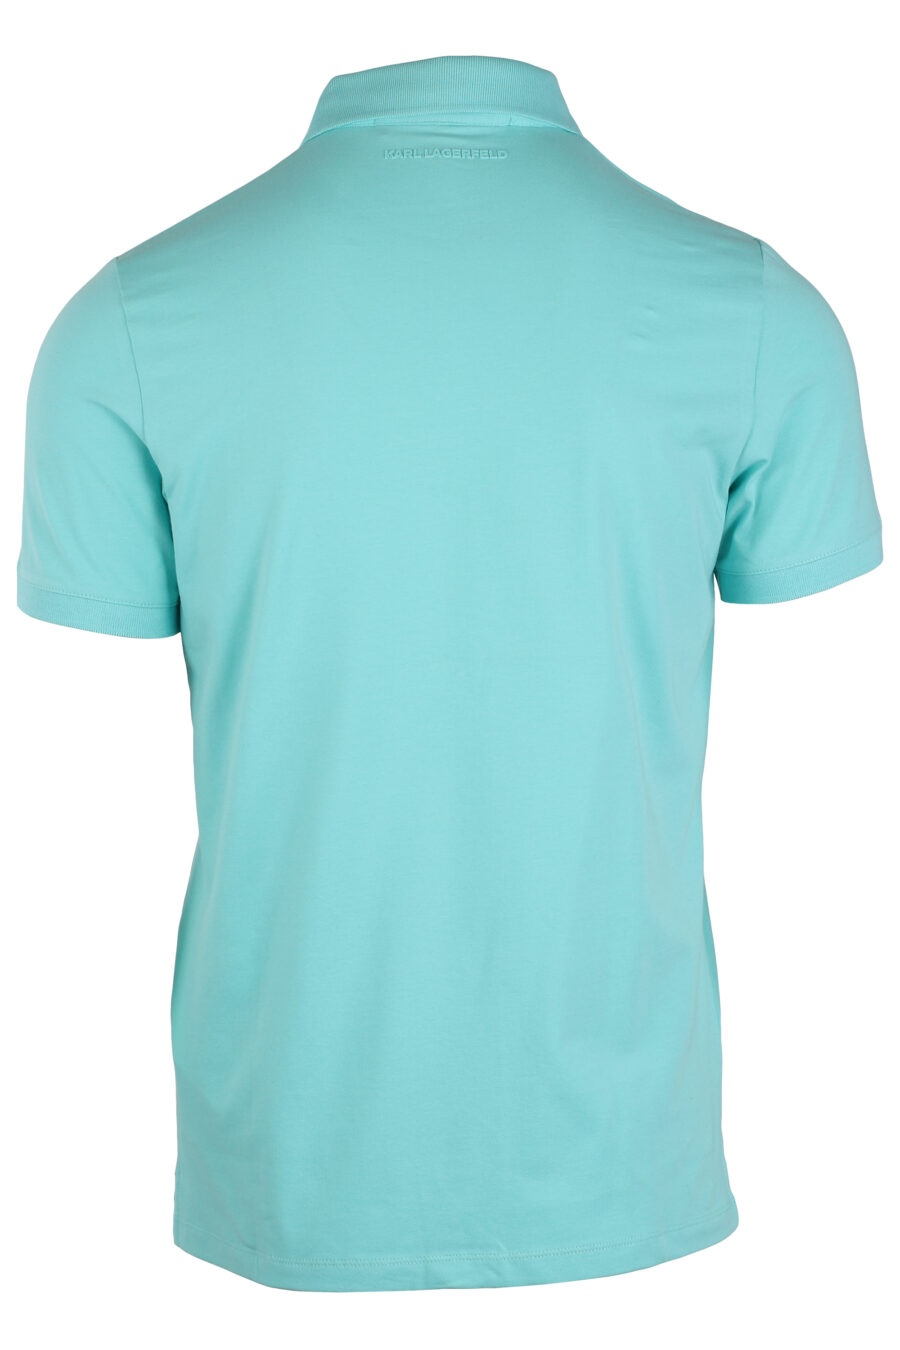 Mint blue polo shirt with "ikonik" logo - IMG 4043